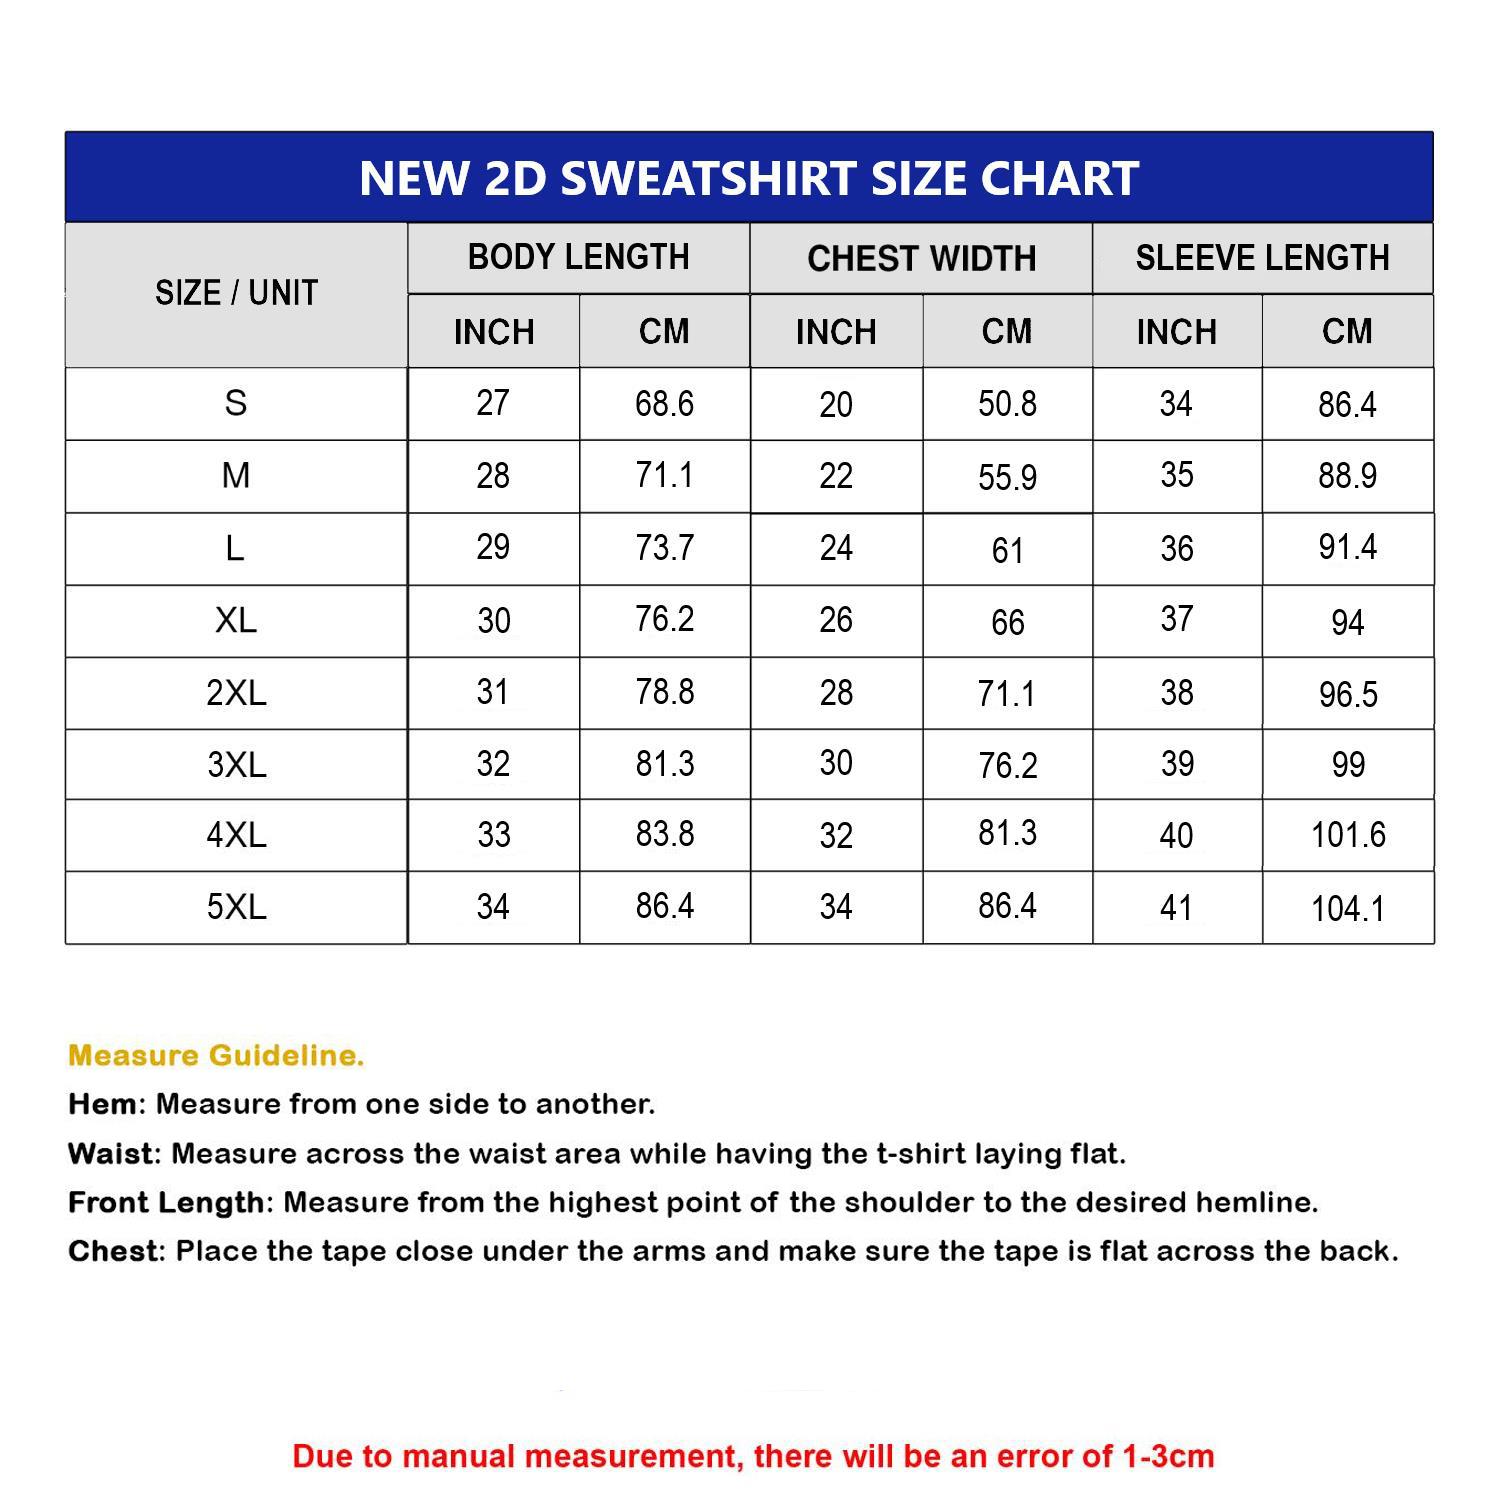 2D sweatshirt size chart